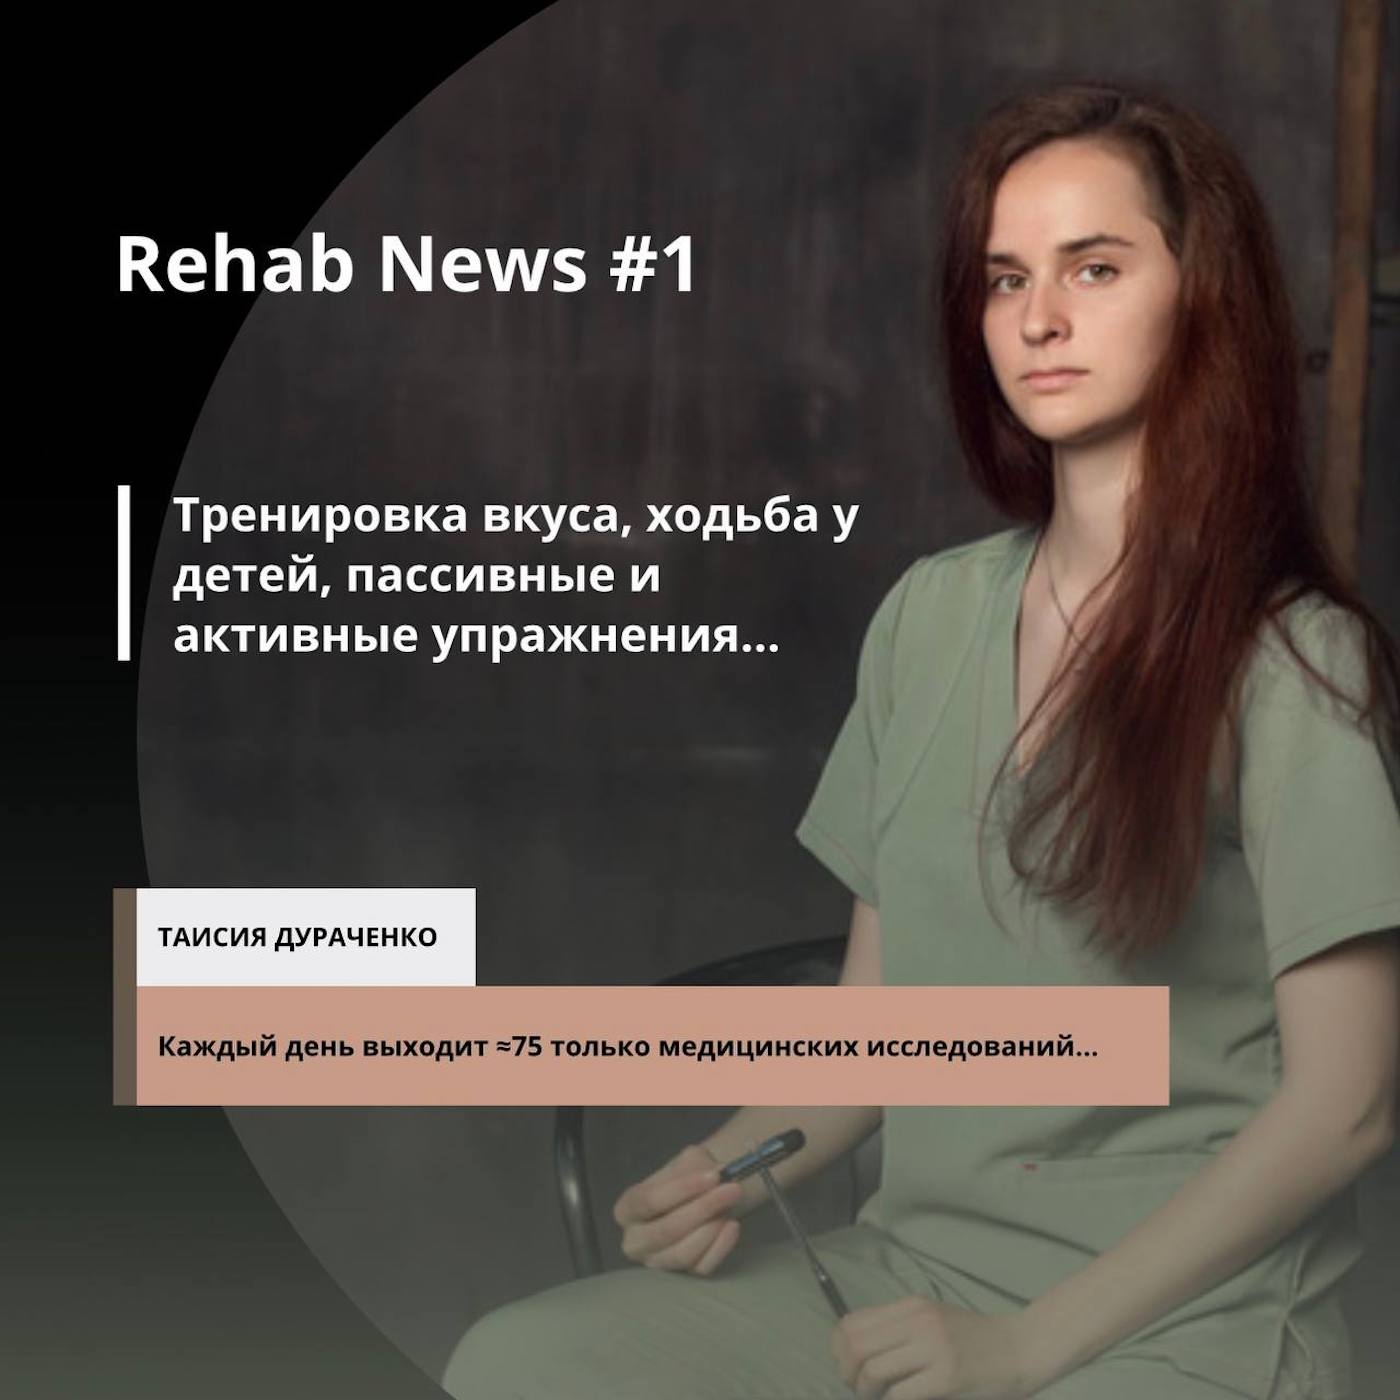 Rehab News #1